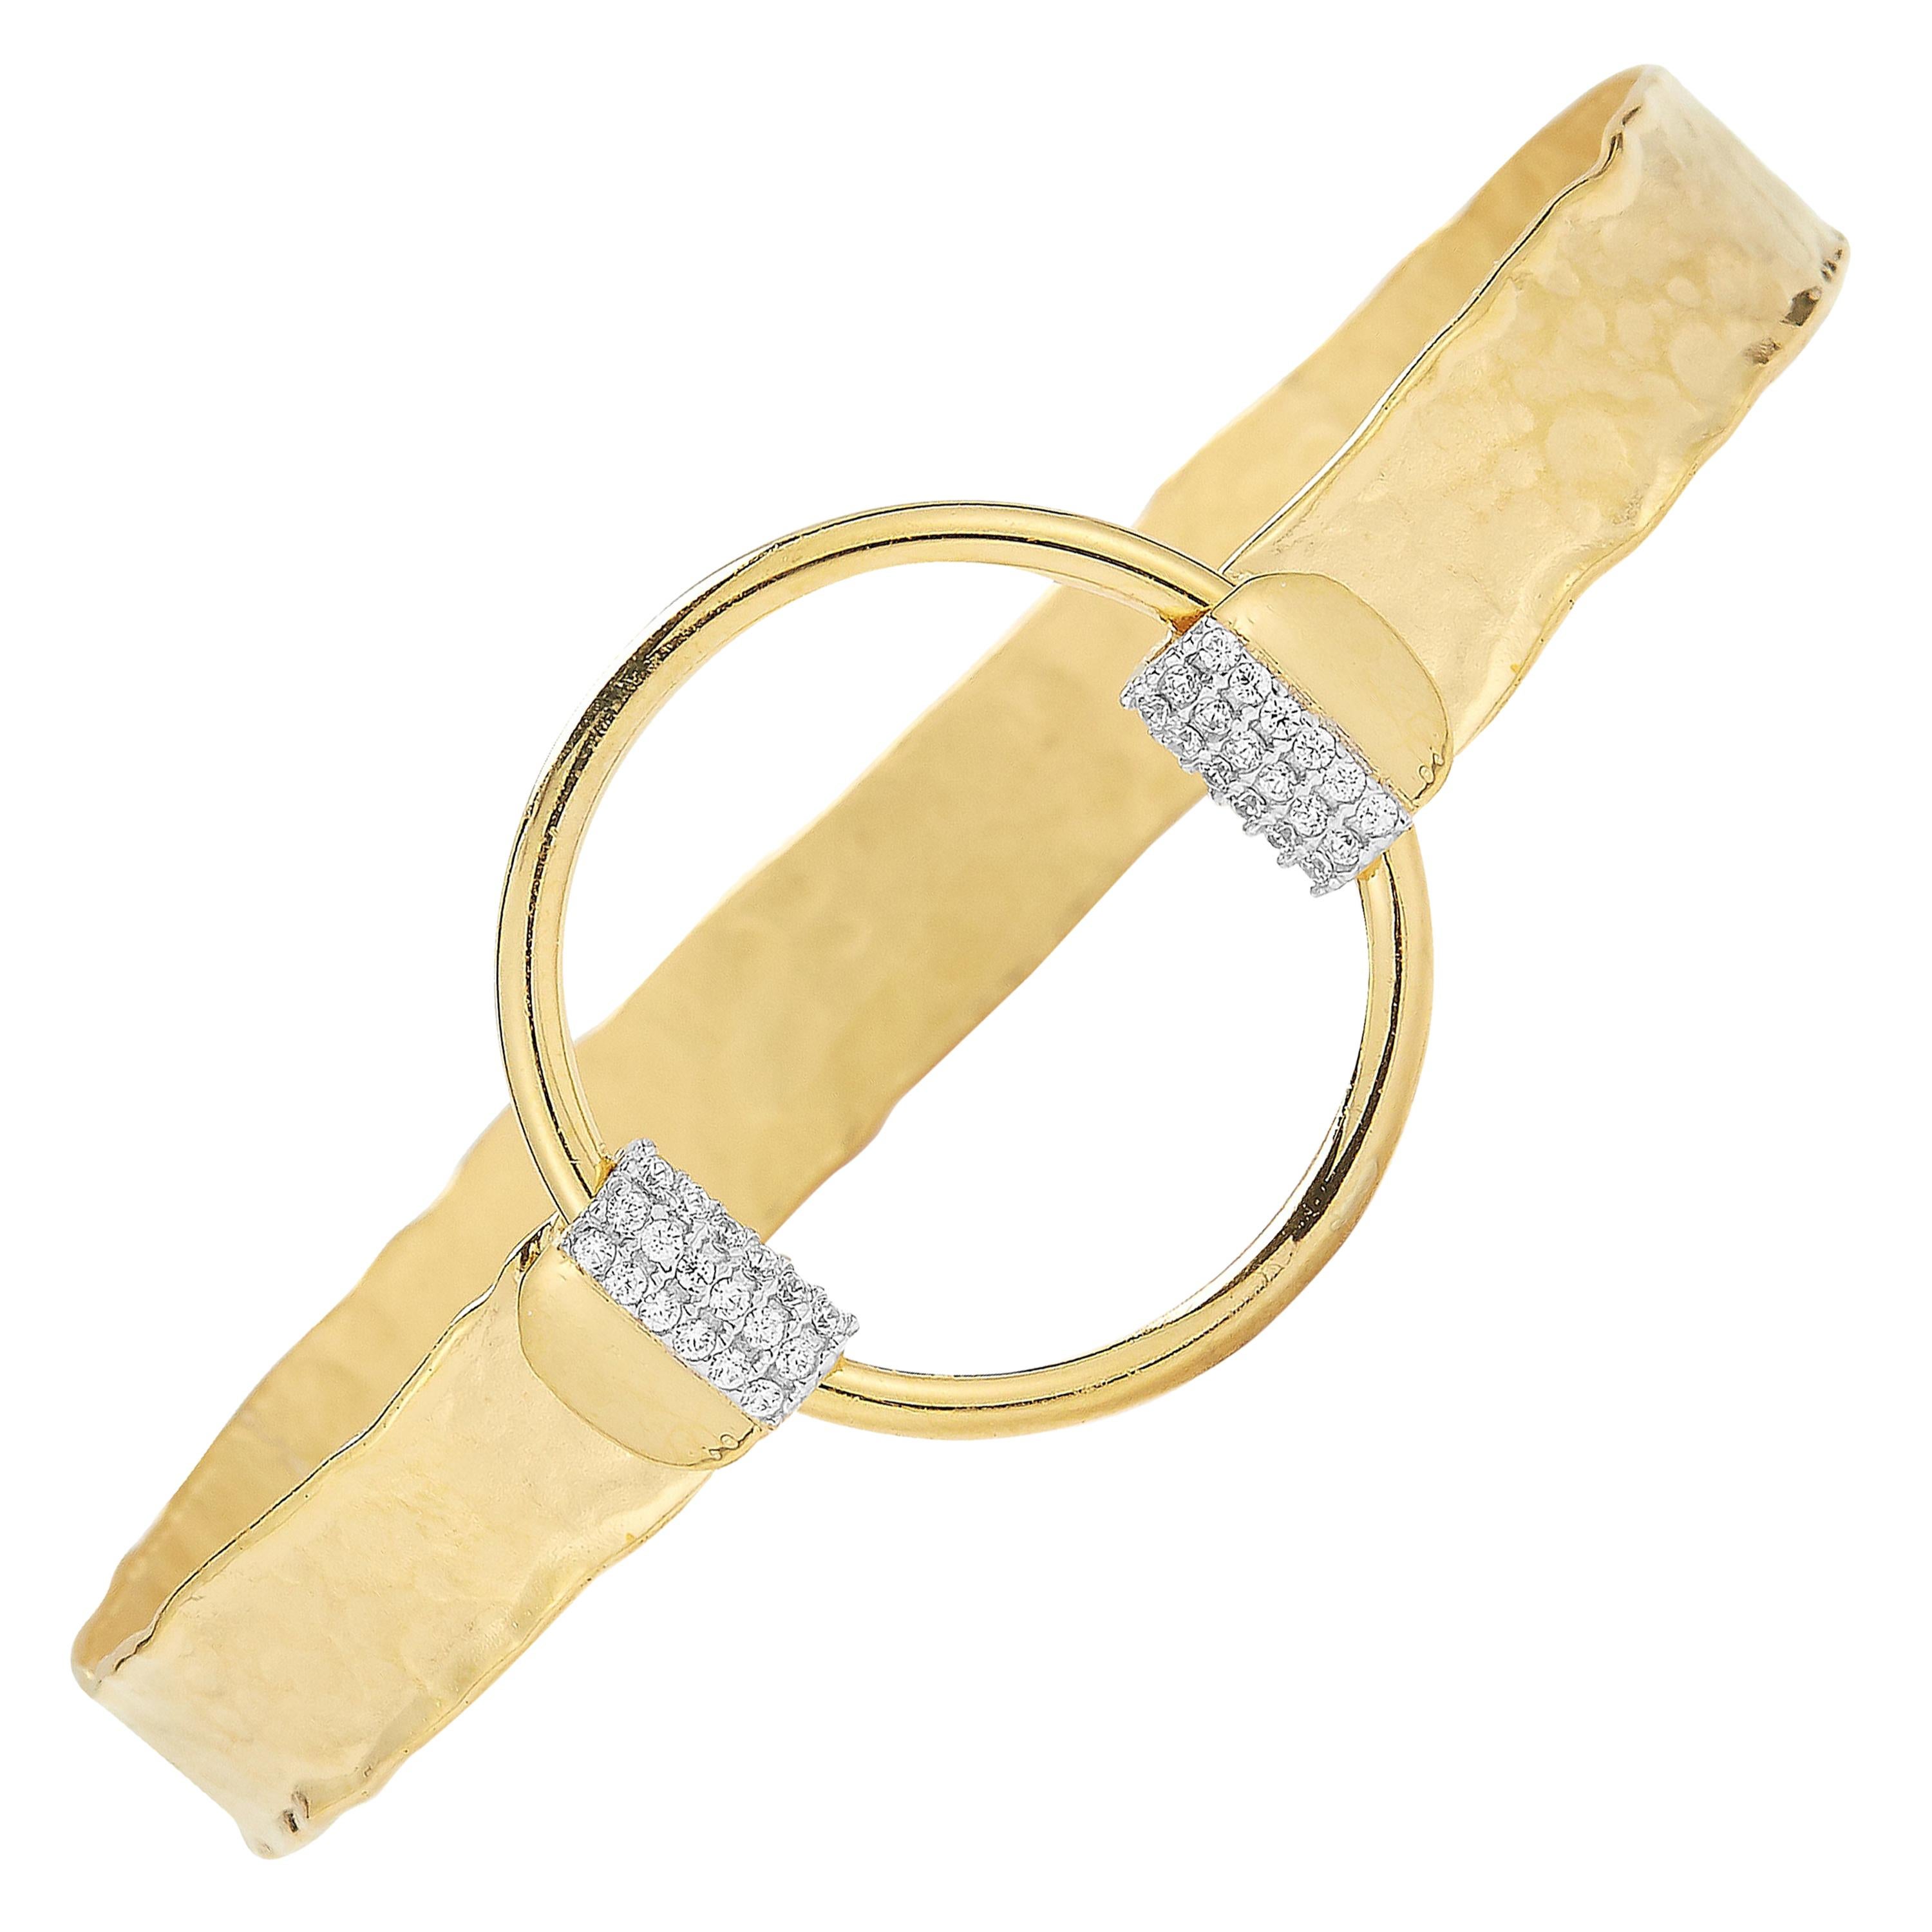 Handcrafted 14 Karat Yellow Gold Open Circle Narrow Cuff Bracelet